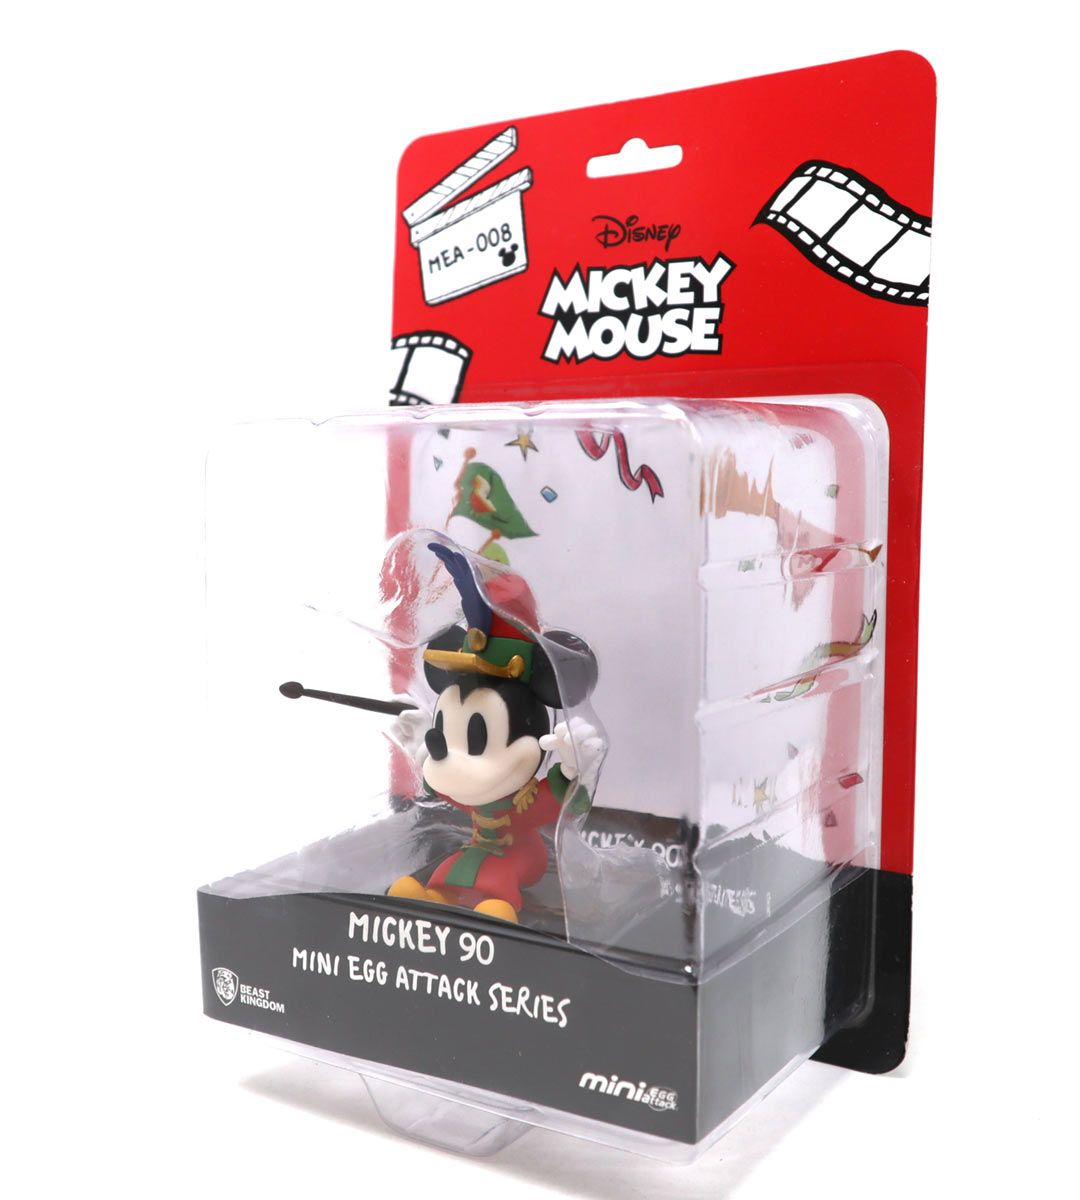 Mini Egg Attack Series - Mickey 90 Chef d'orchestre  (Mickey Mouse)